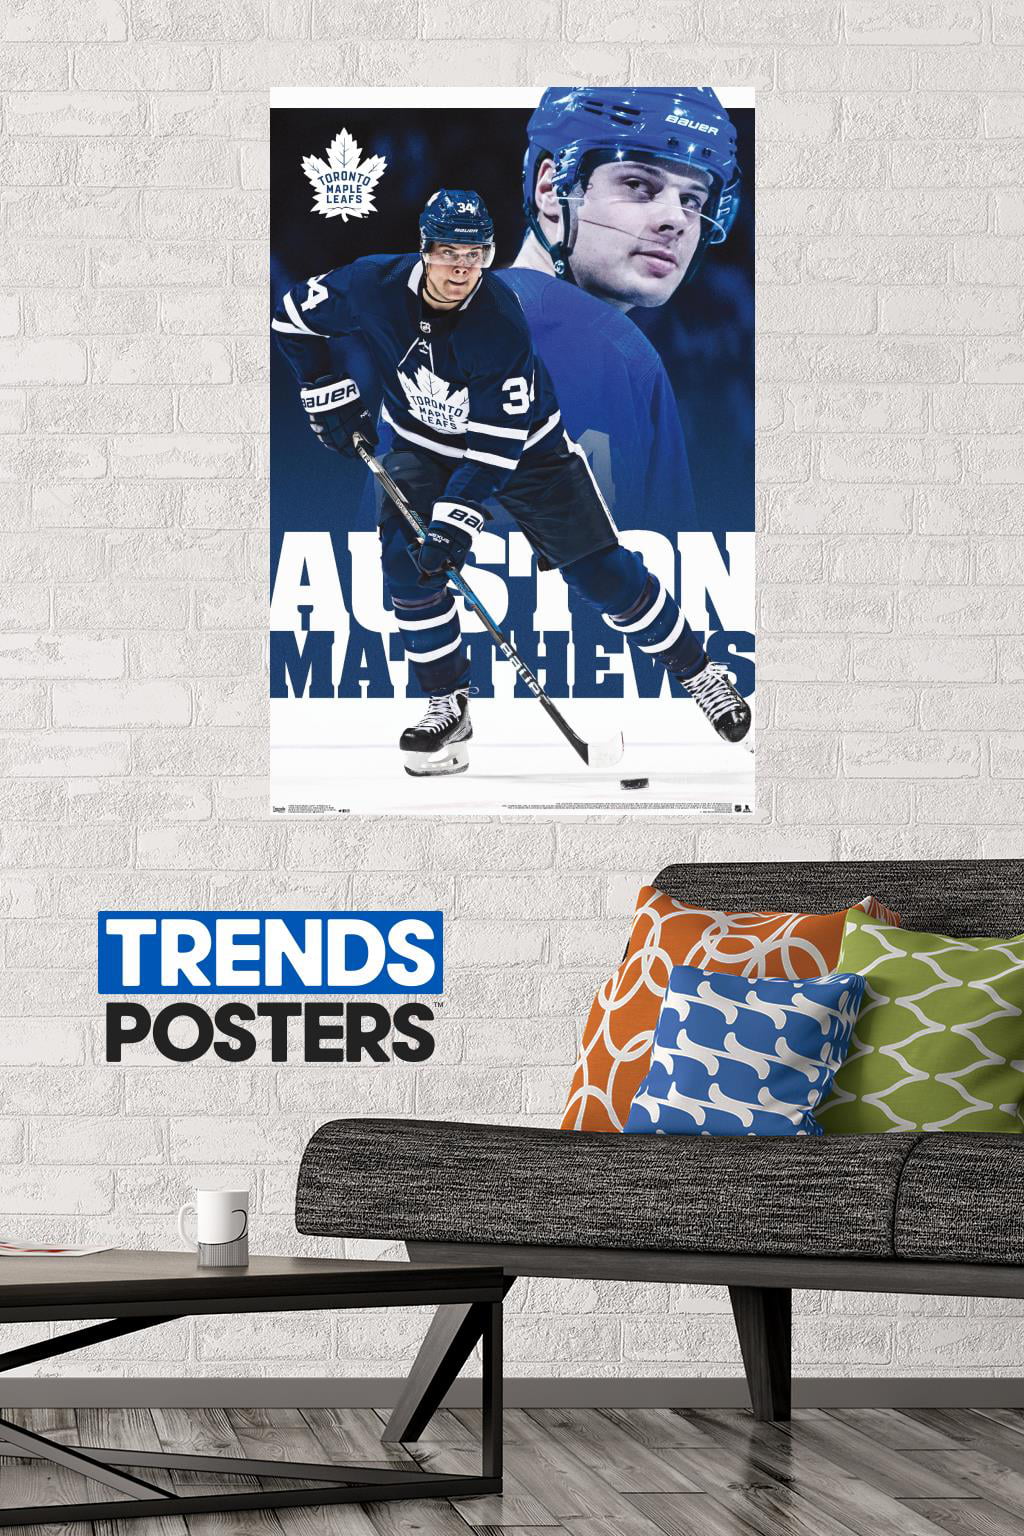 NHL Toronto Maple Leafs - Austin Matthews 17 Wall Poster, 22.375 x 34